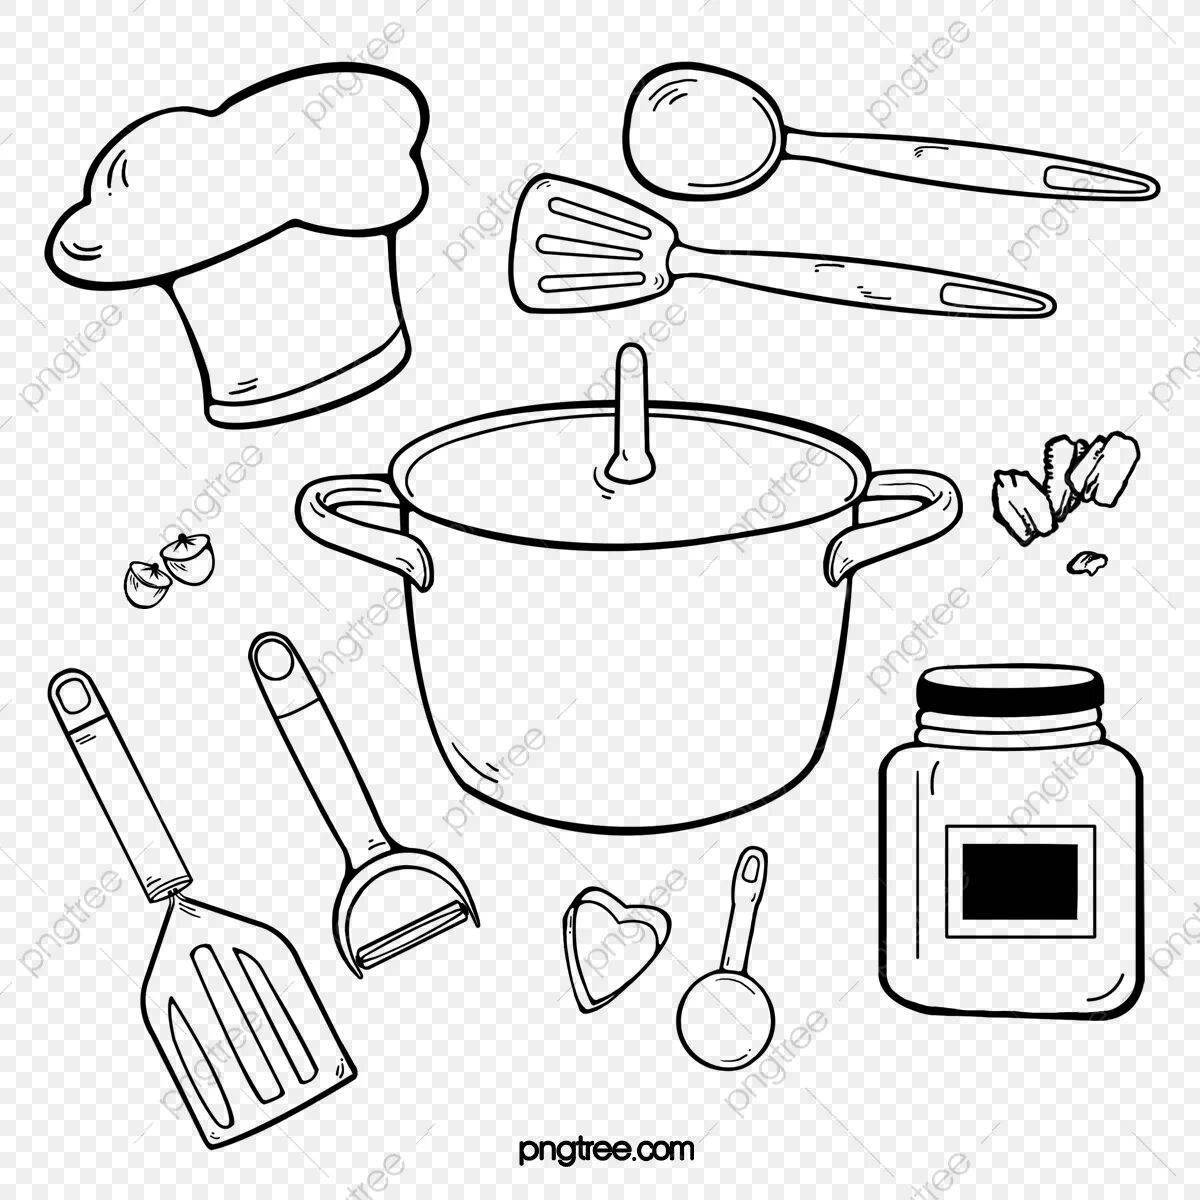 Tempting kitchen appliances coloring page